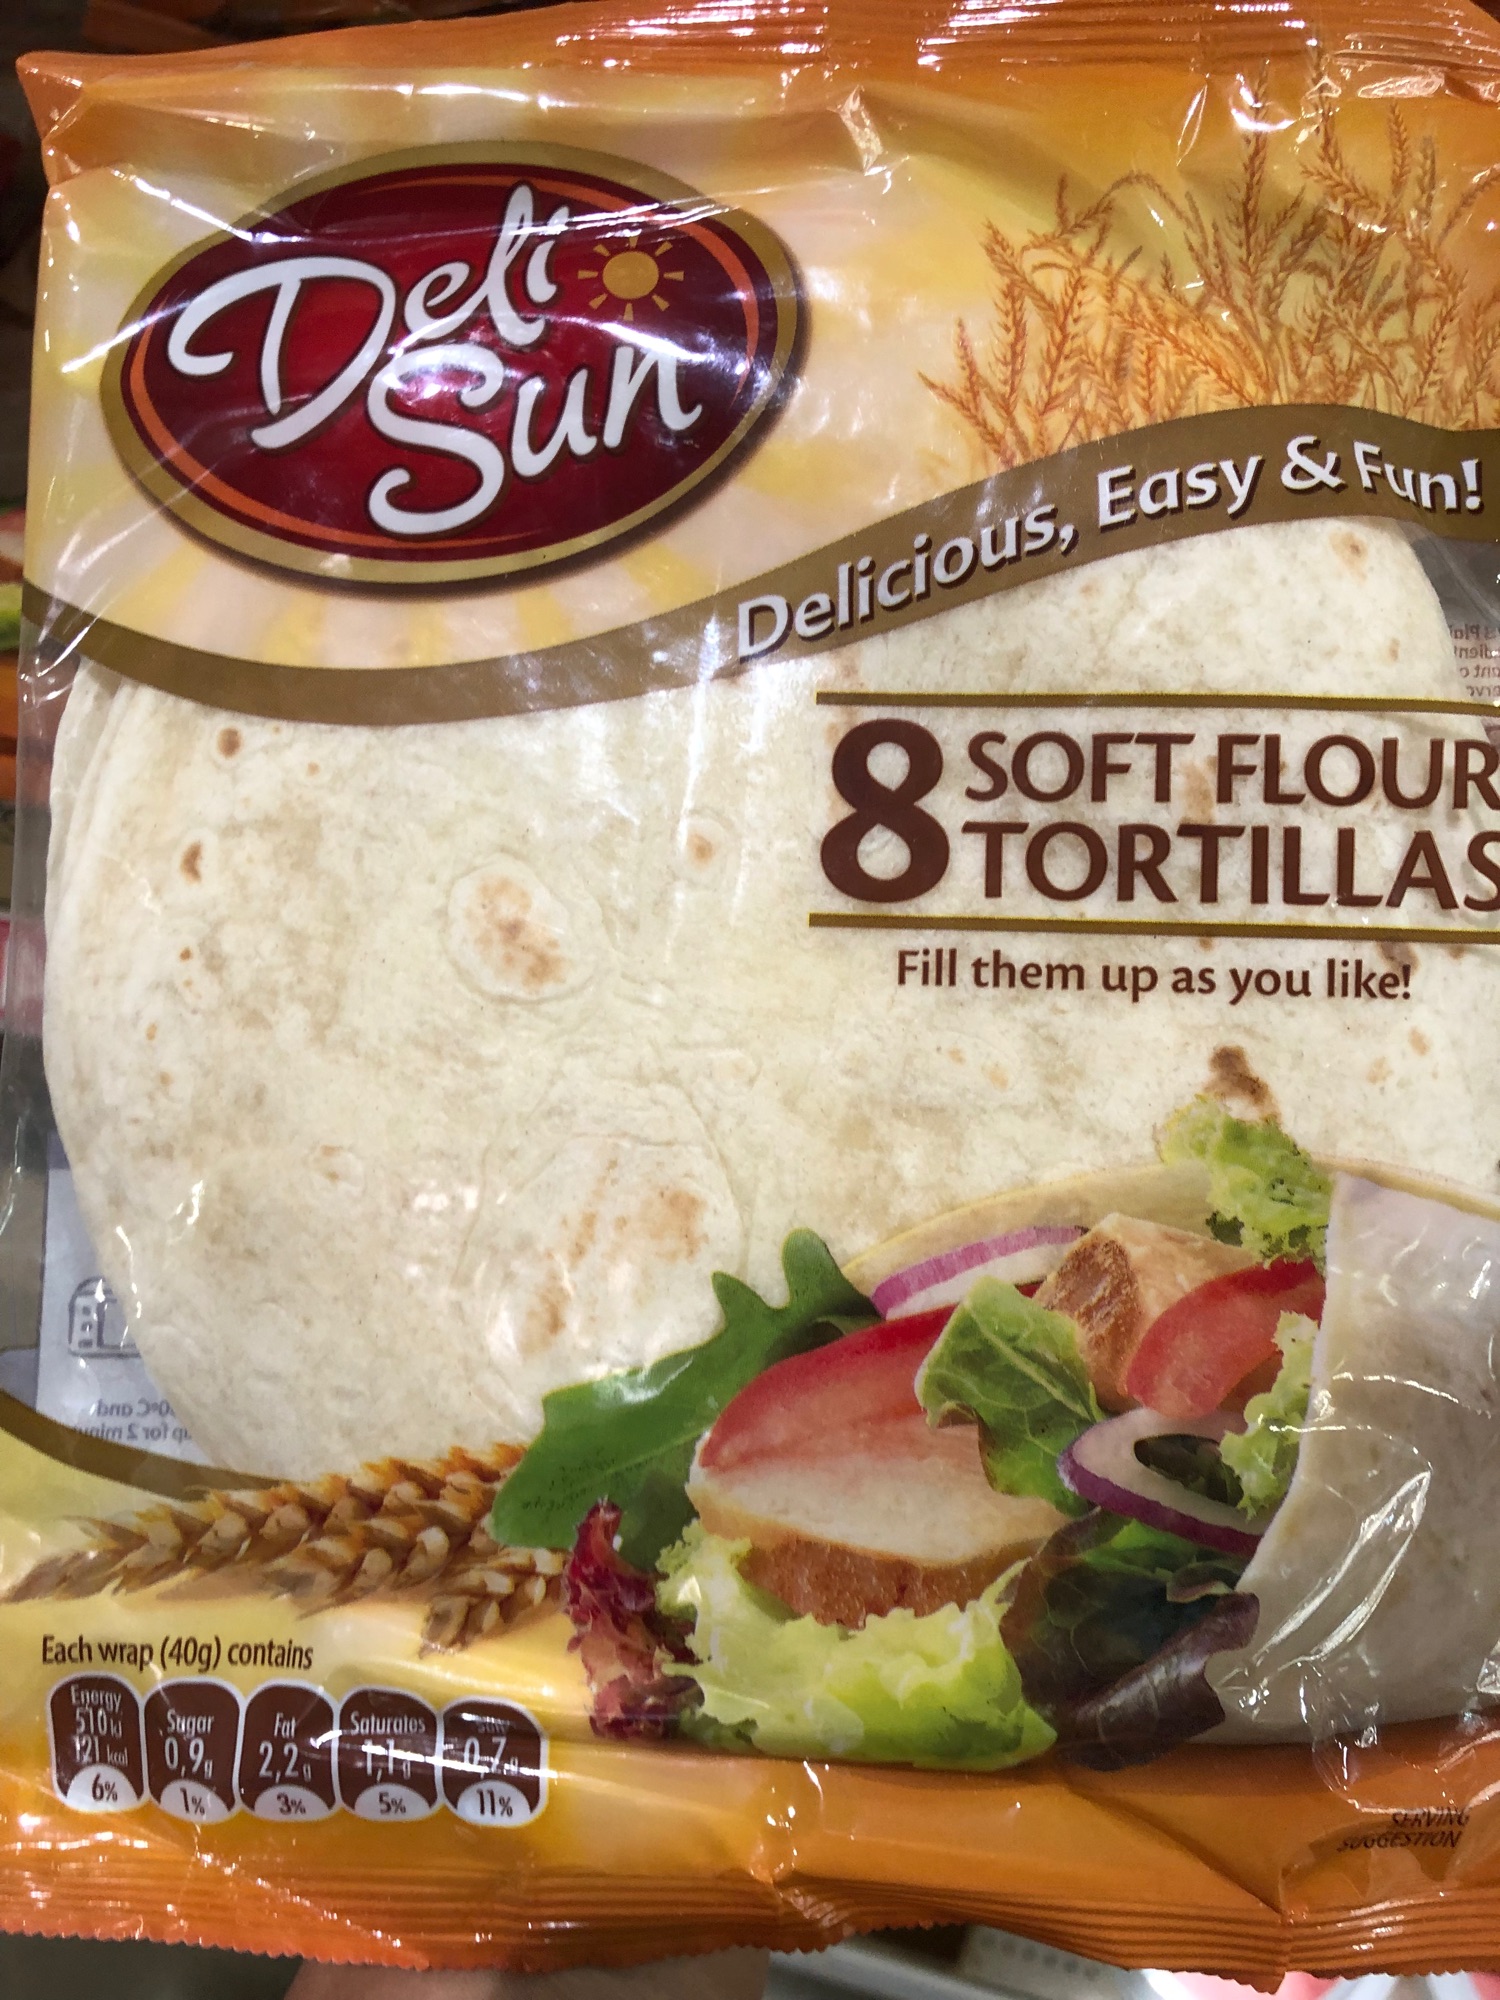 DeliSun Soft Flour Tortillas แผ่นแป้งตอร์ติญ่าดั้งเดิม 8 Wraps